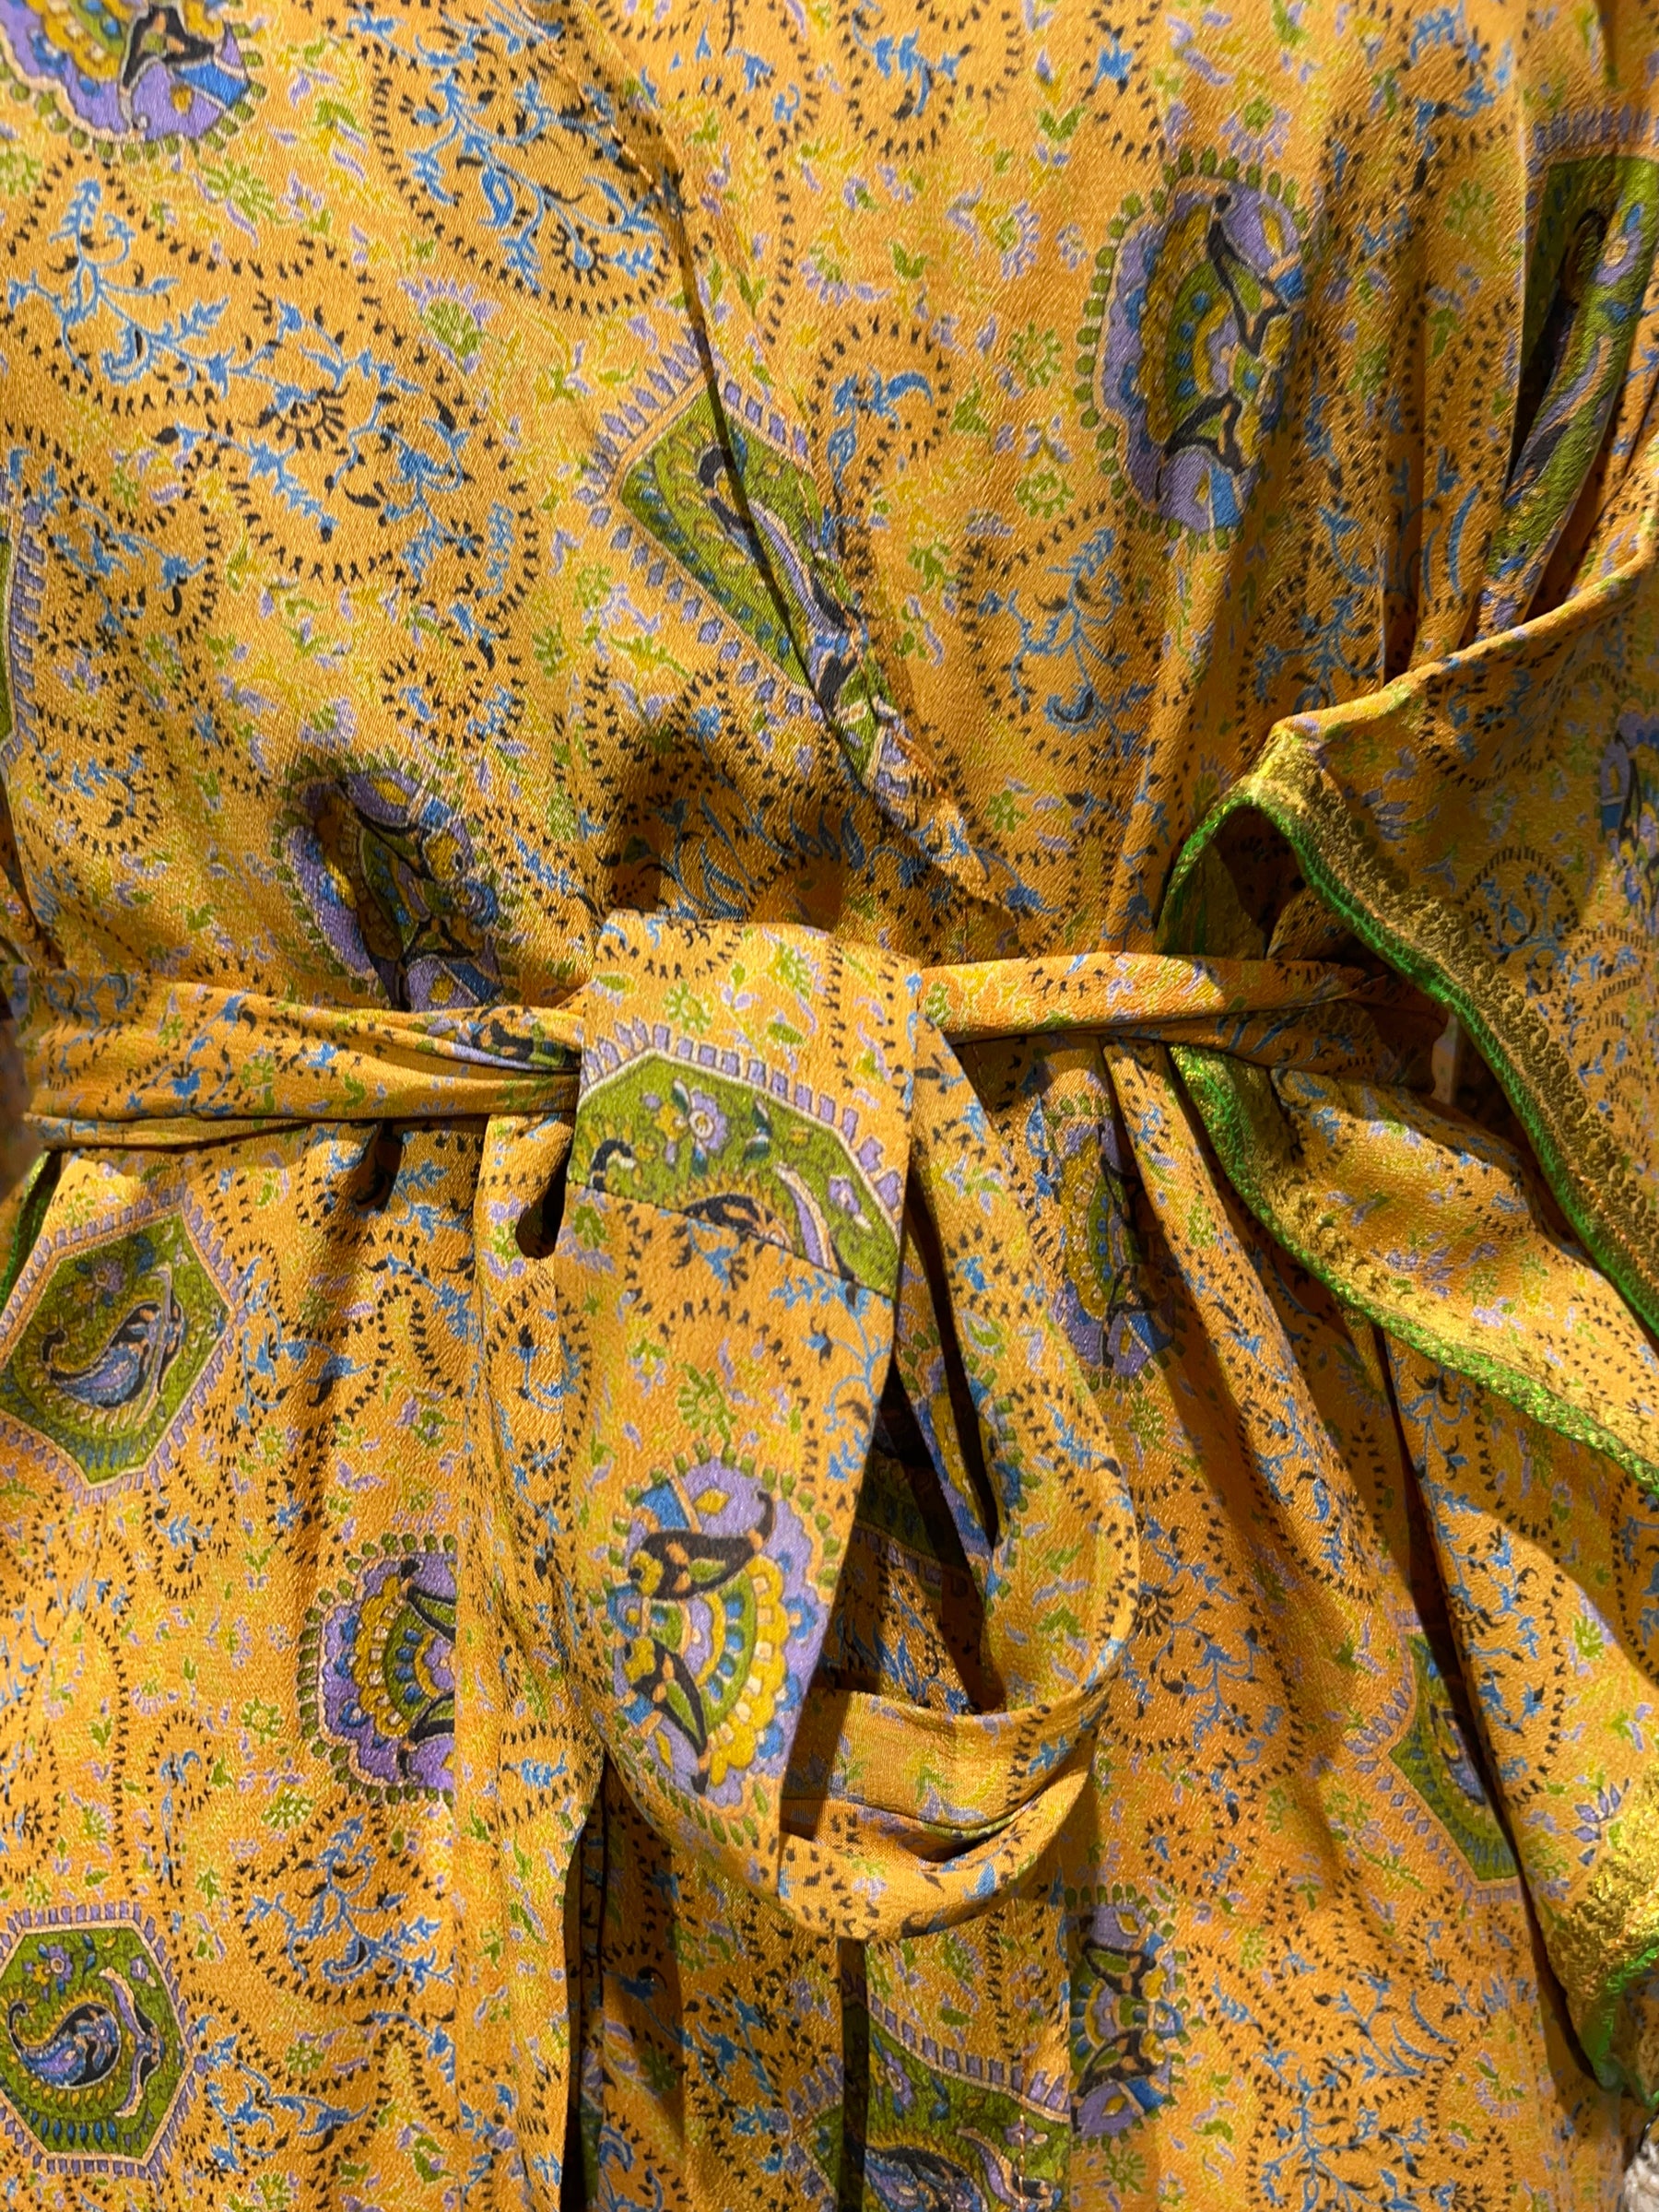 PRC3697 Avatar Pure Silk Kimono-Sleeved Jacket with Belt